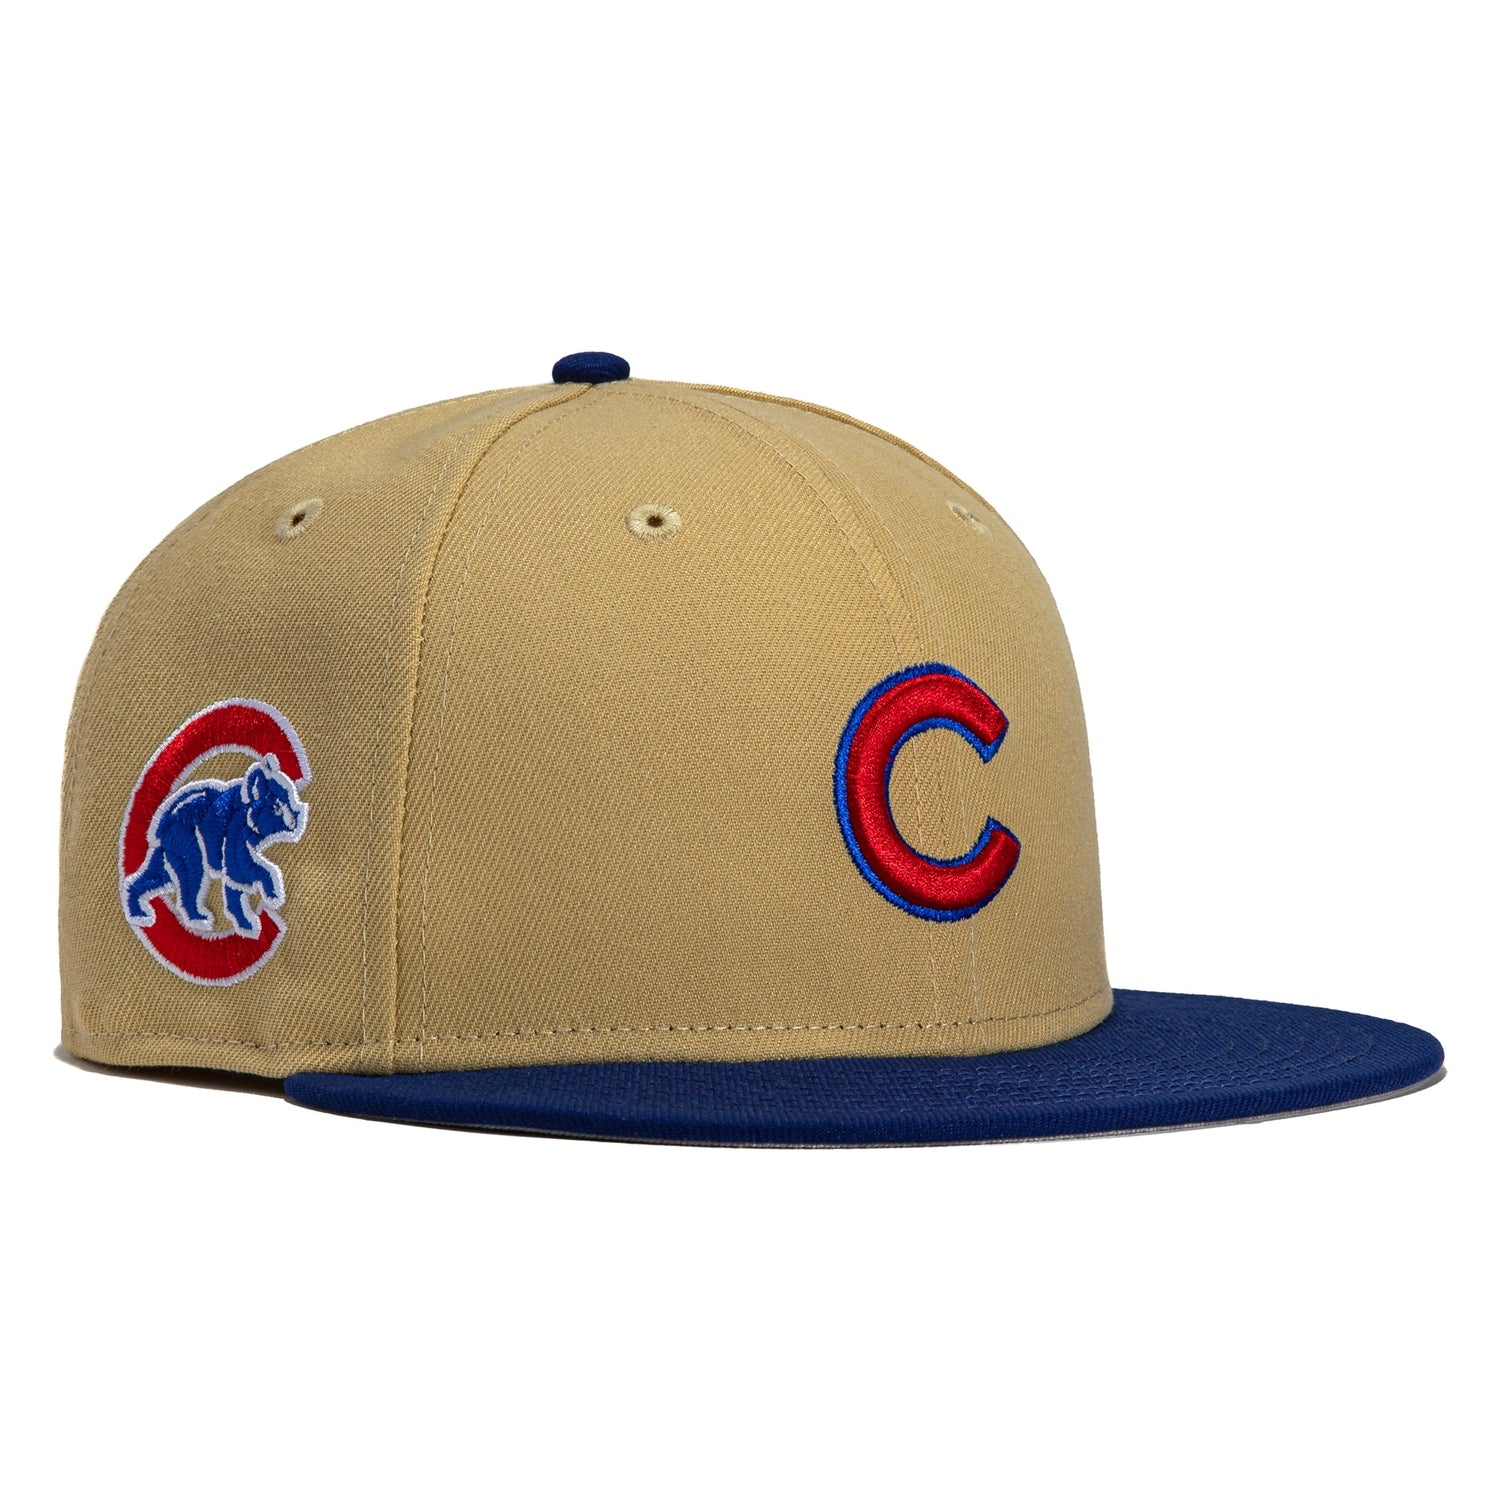 Chicago Cubs W Flag Cleanup Adjustable Cap